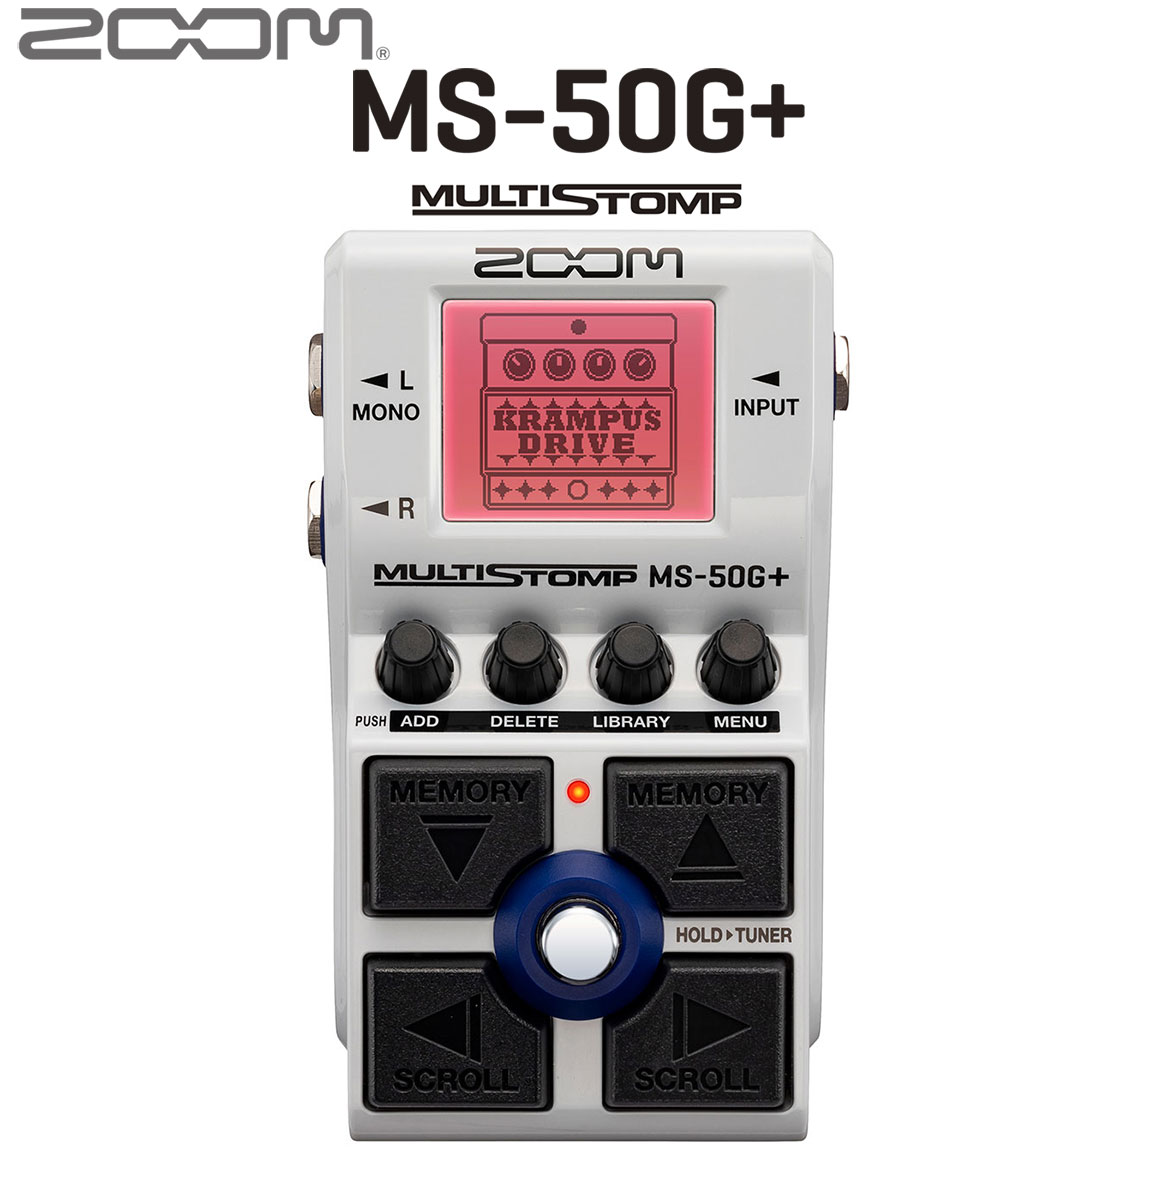 ◎ MULTI STOMP MS-50G for Guitar